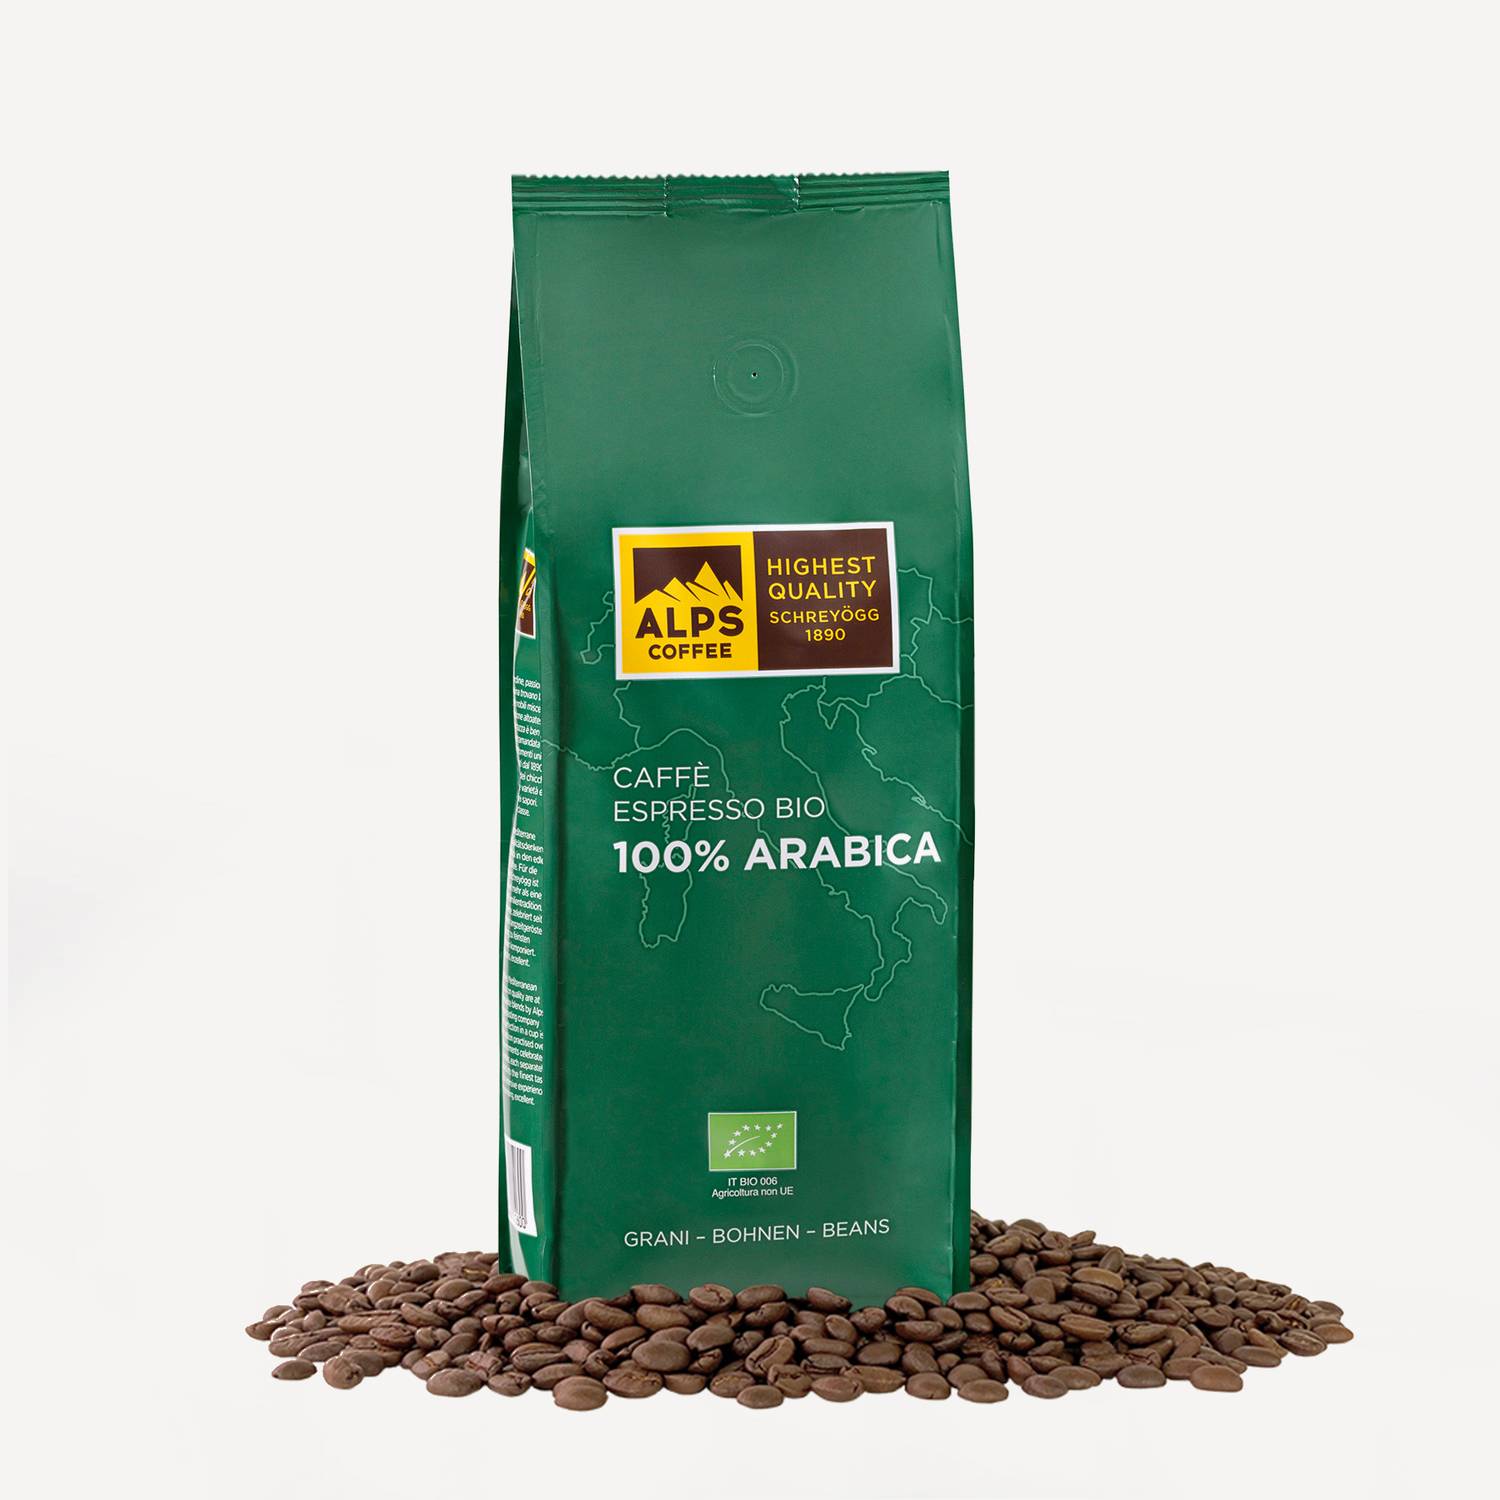 Caffè Espresso BIO 100% ARABICA